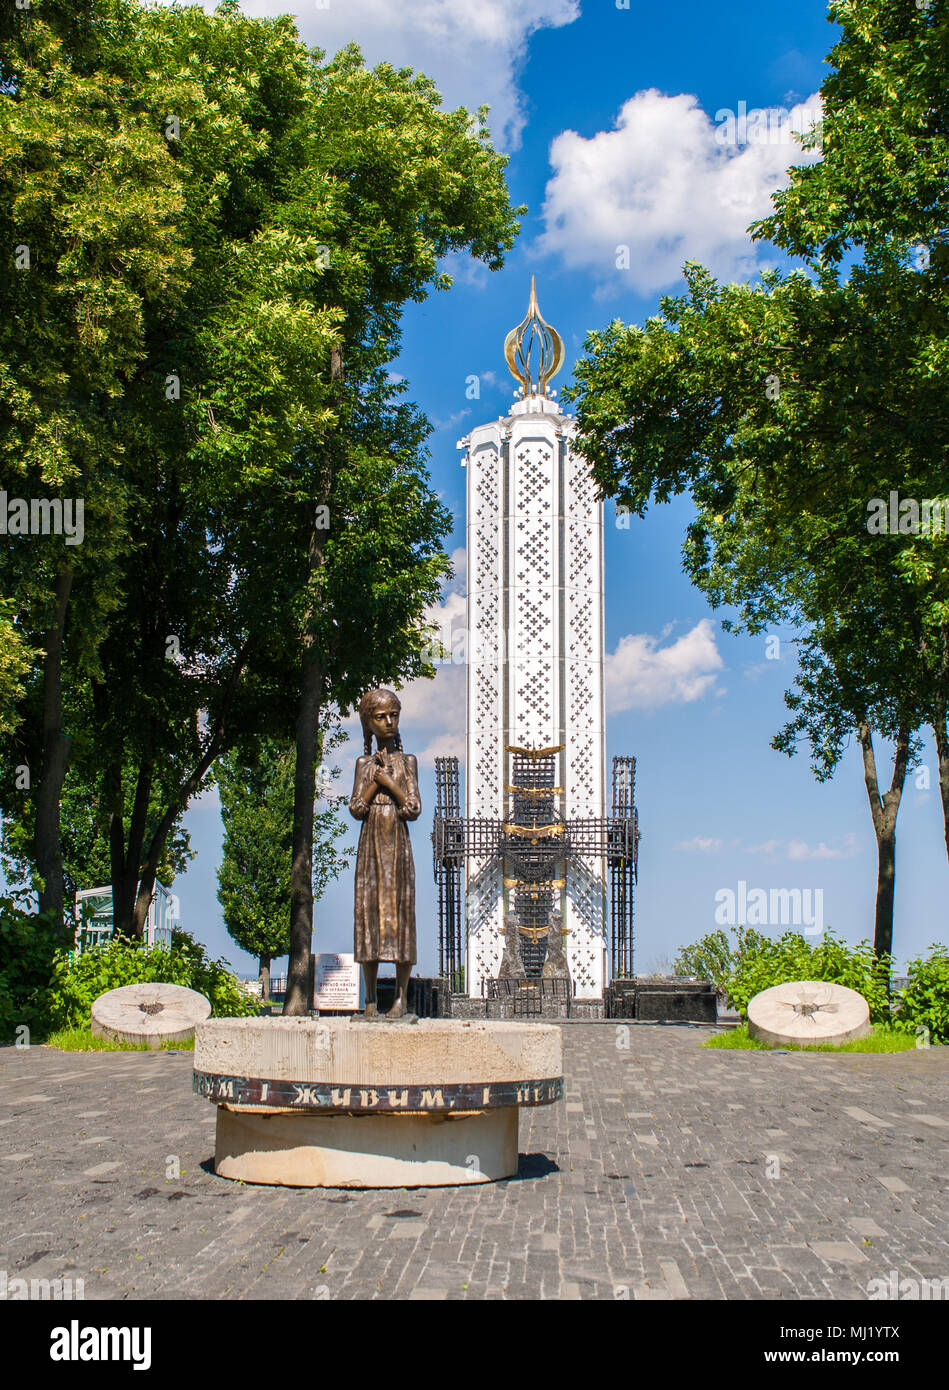 Monumento in memoria delle vittime della grande carestia (Holodomor) in Ukra Foto Stock